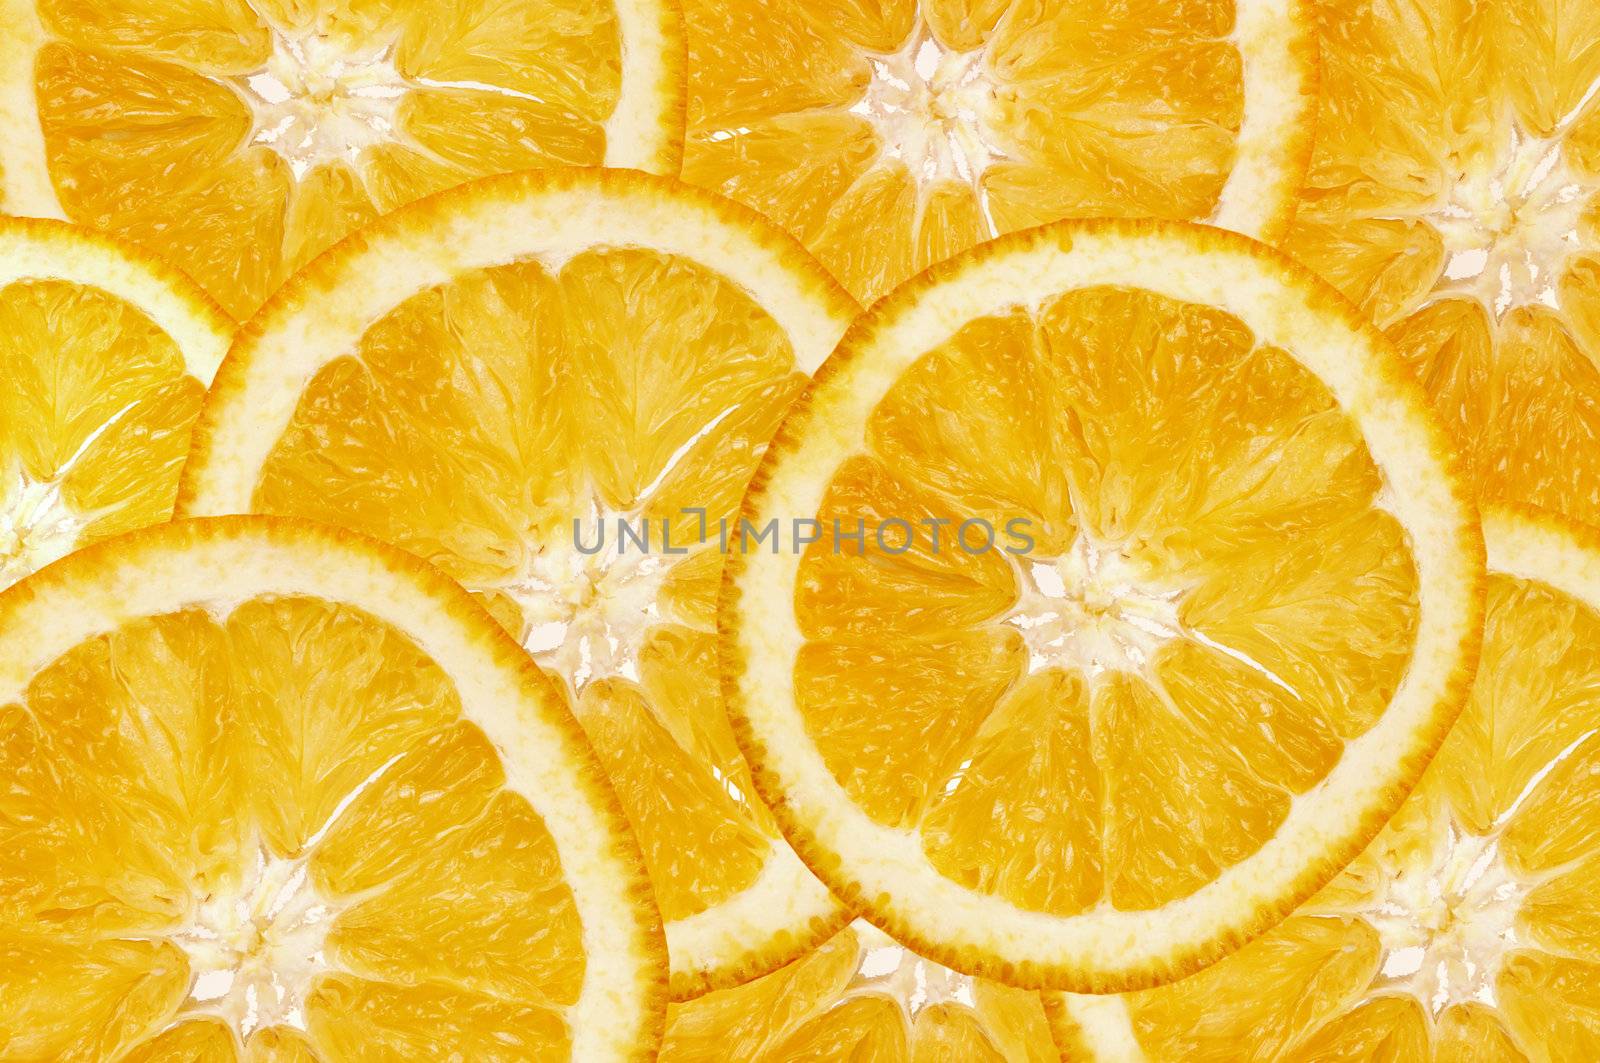 oranges by Mibuch